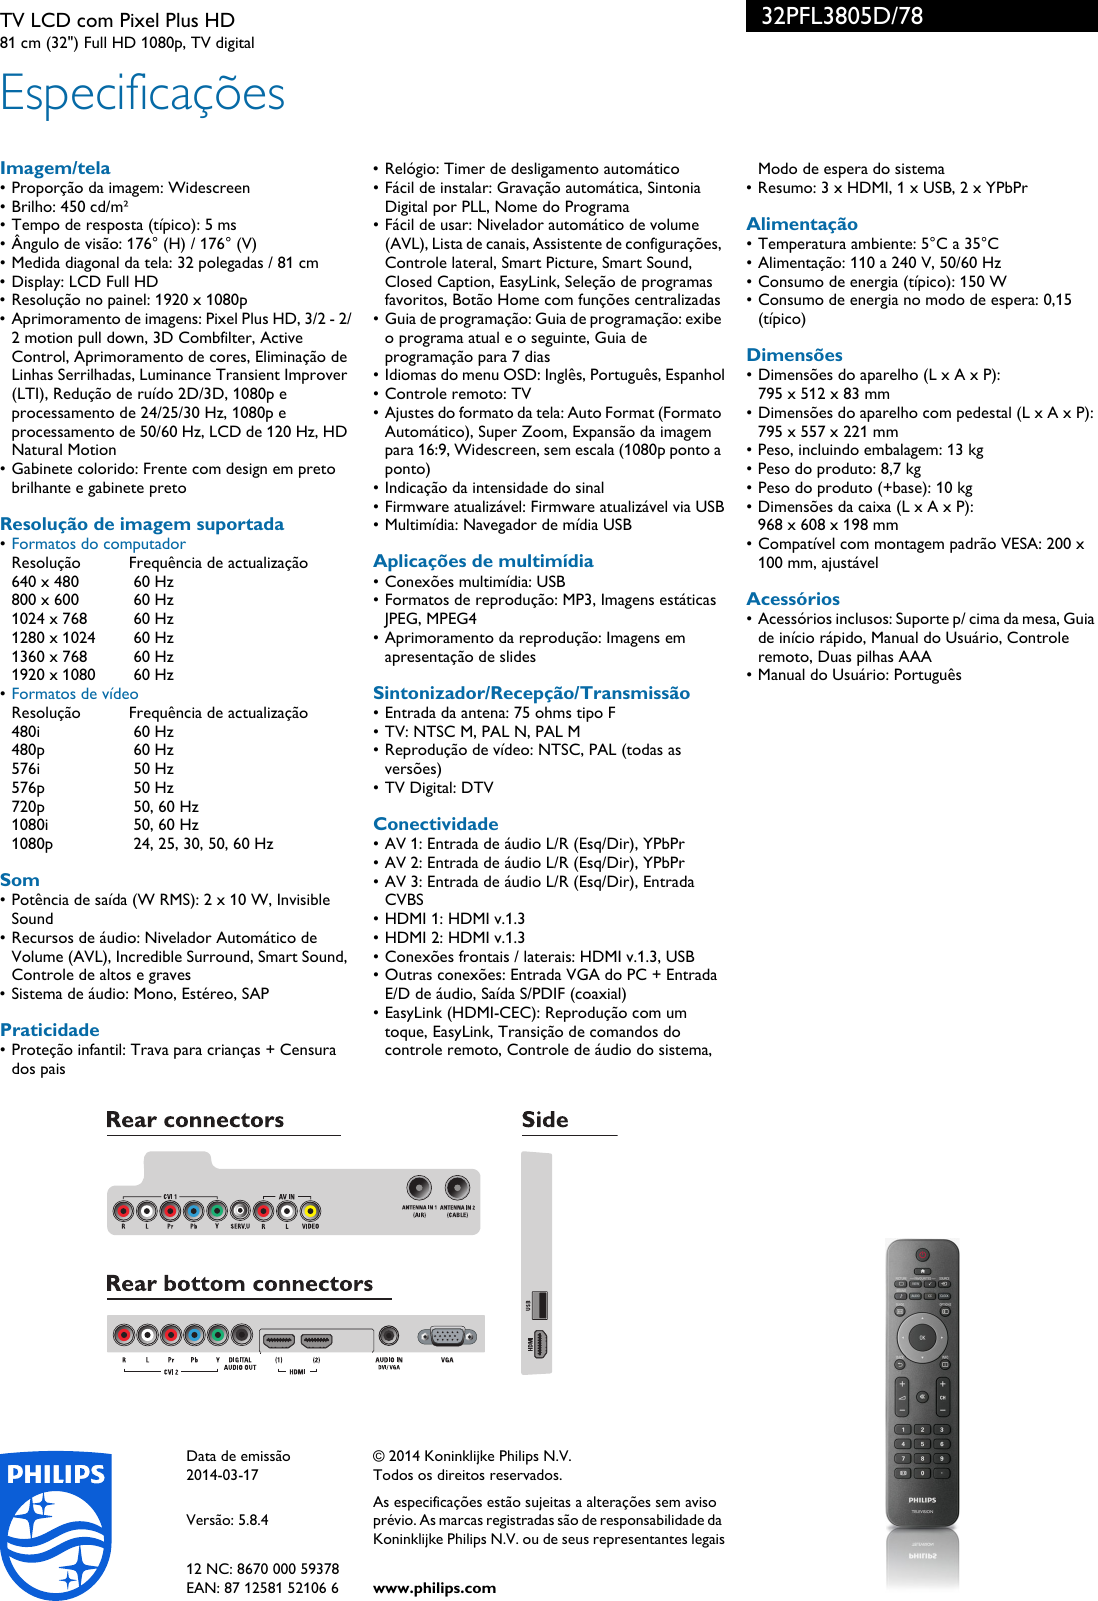 Page 3 of 3 - Philips 32PFL3805D/78 TV LCD Com Pixel Plus HD User Manual Folheto 32pfl3805d 78 Pss Brpbr